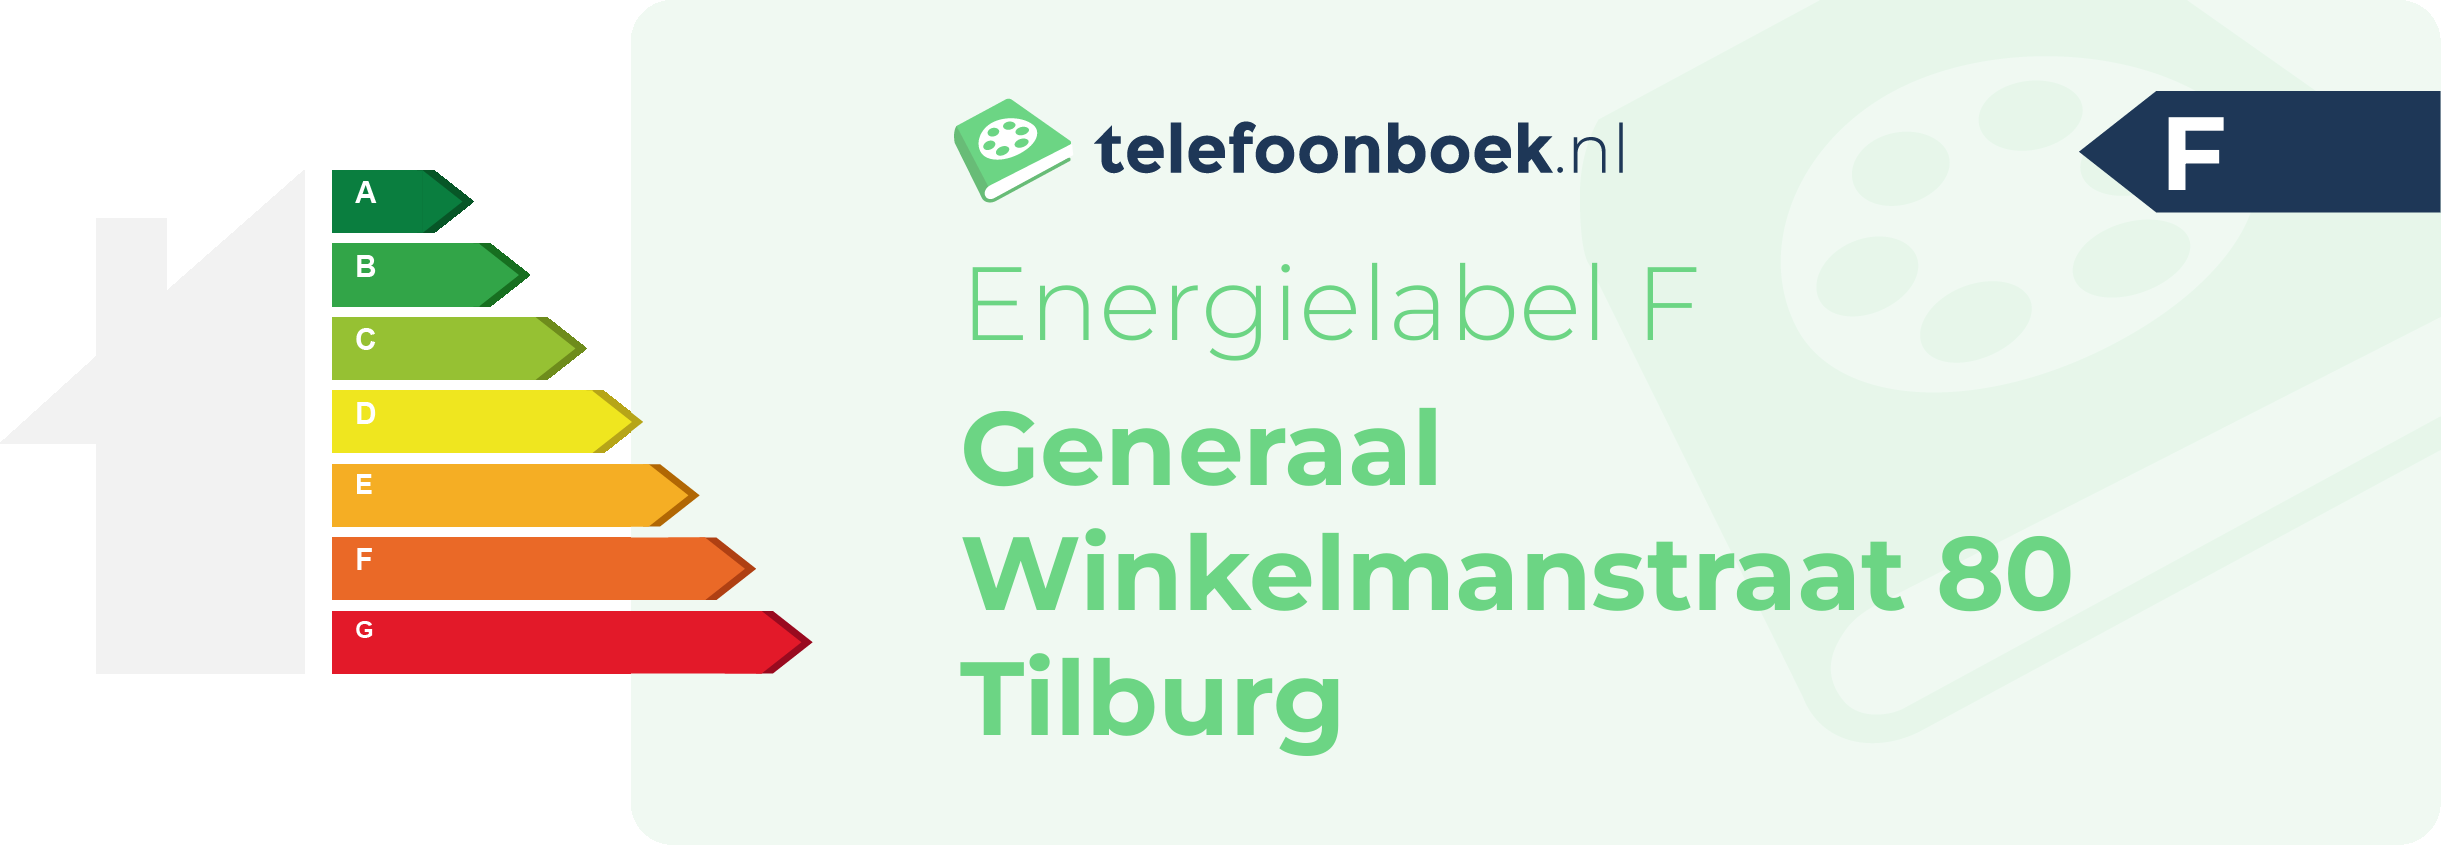 Energielabel Generaal Winkelmanstraat 80 Tilburg